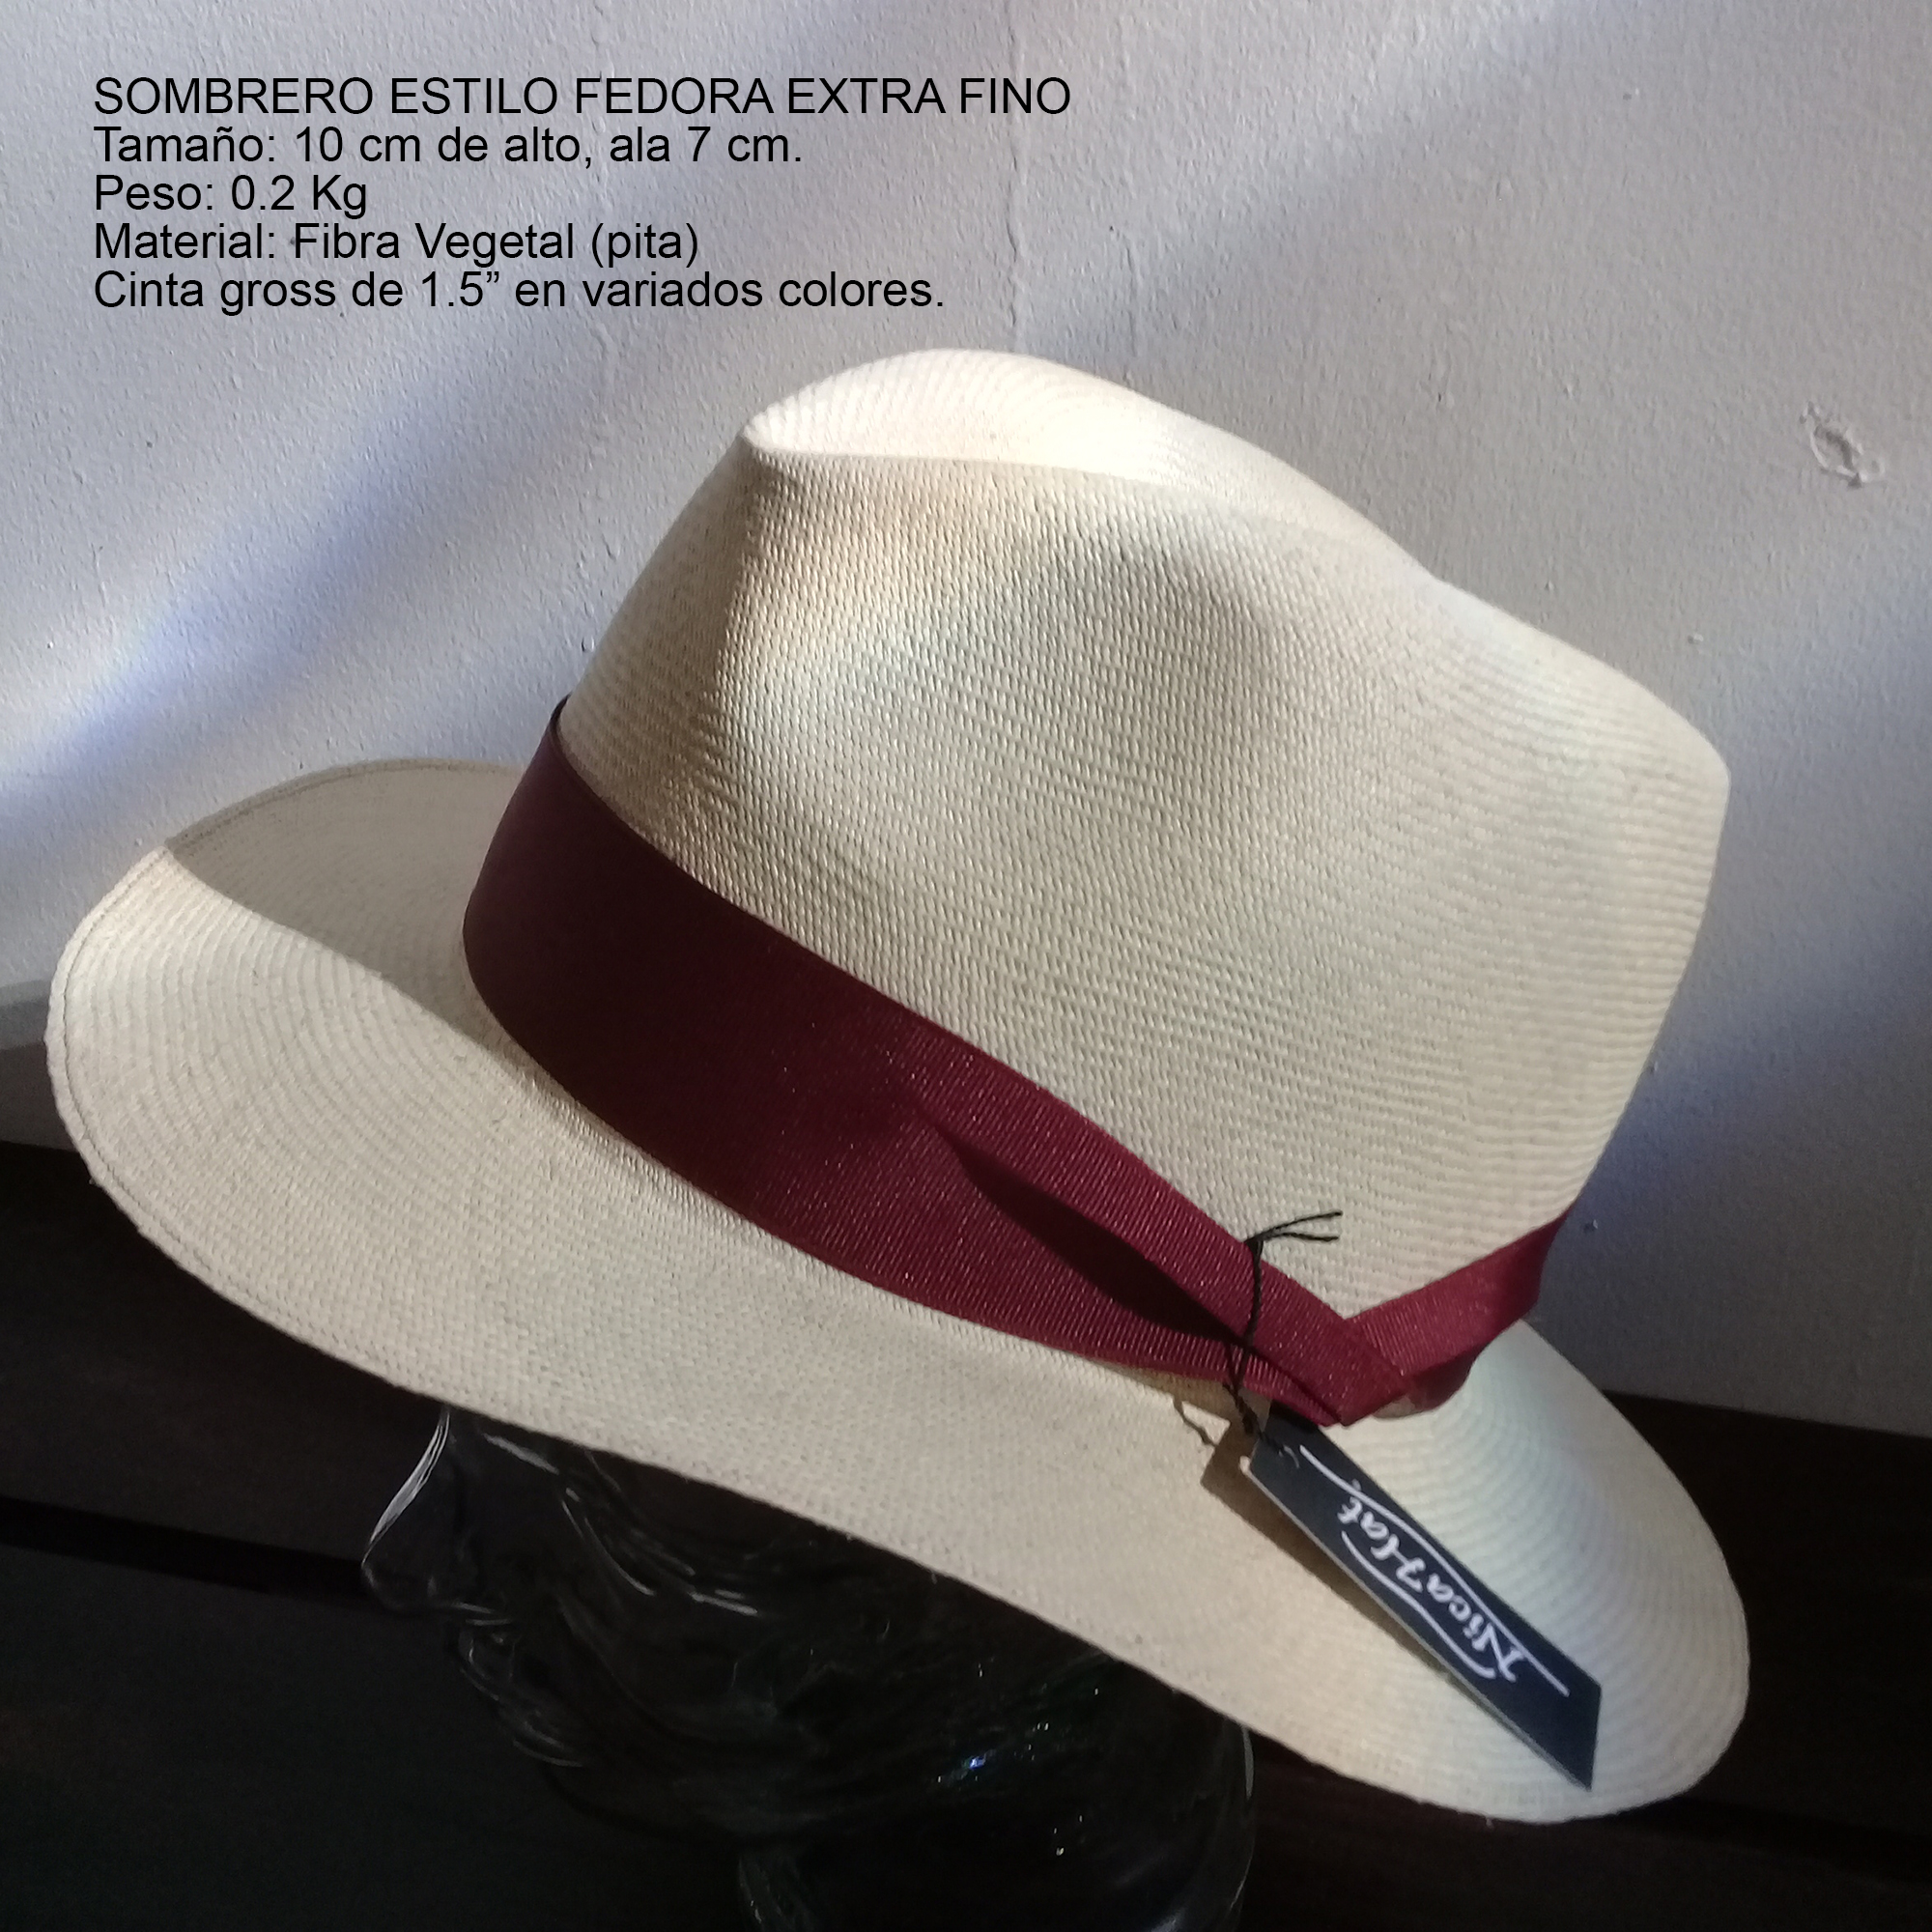 Sombrero Estilo Fedora Extra Fino.